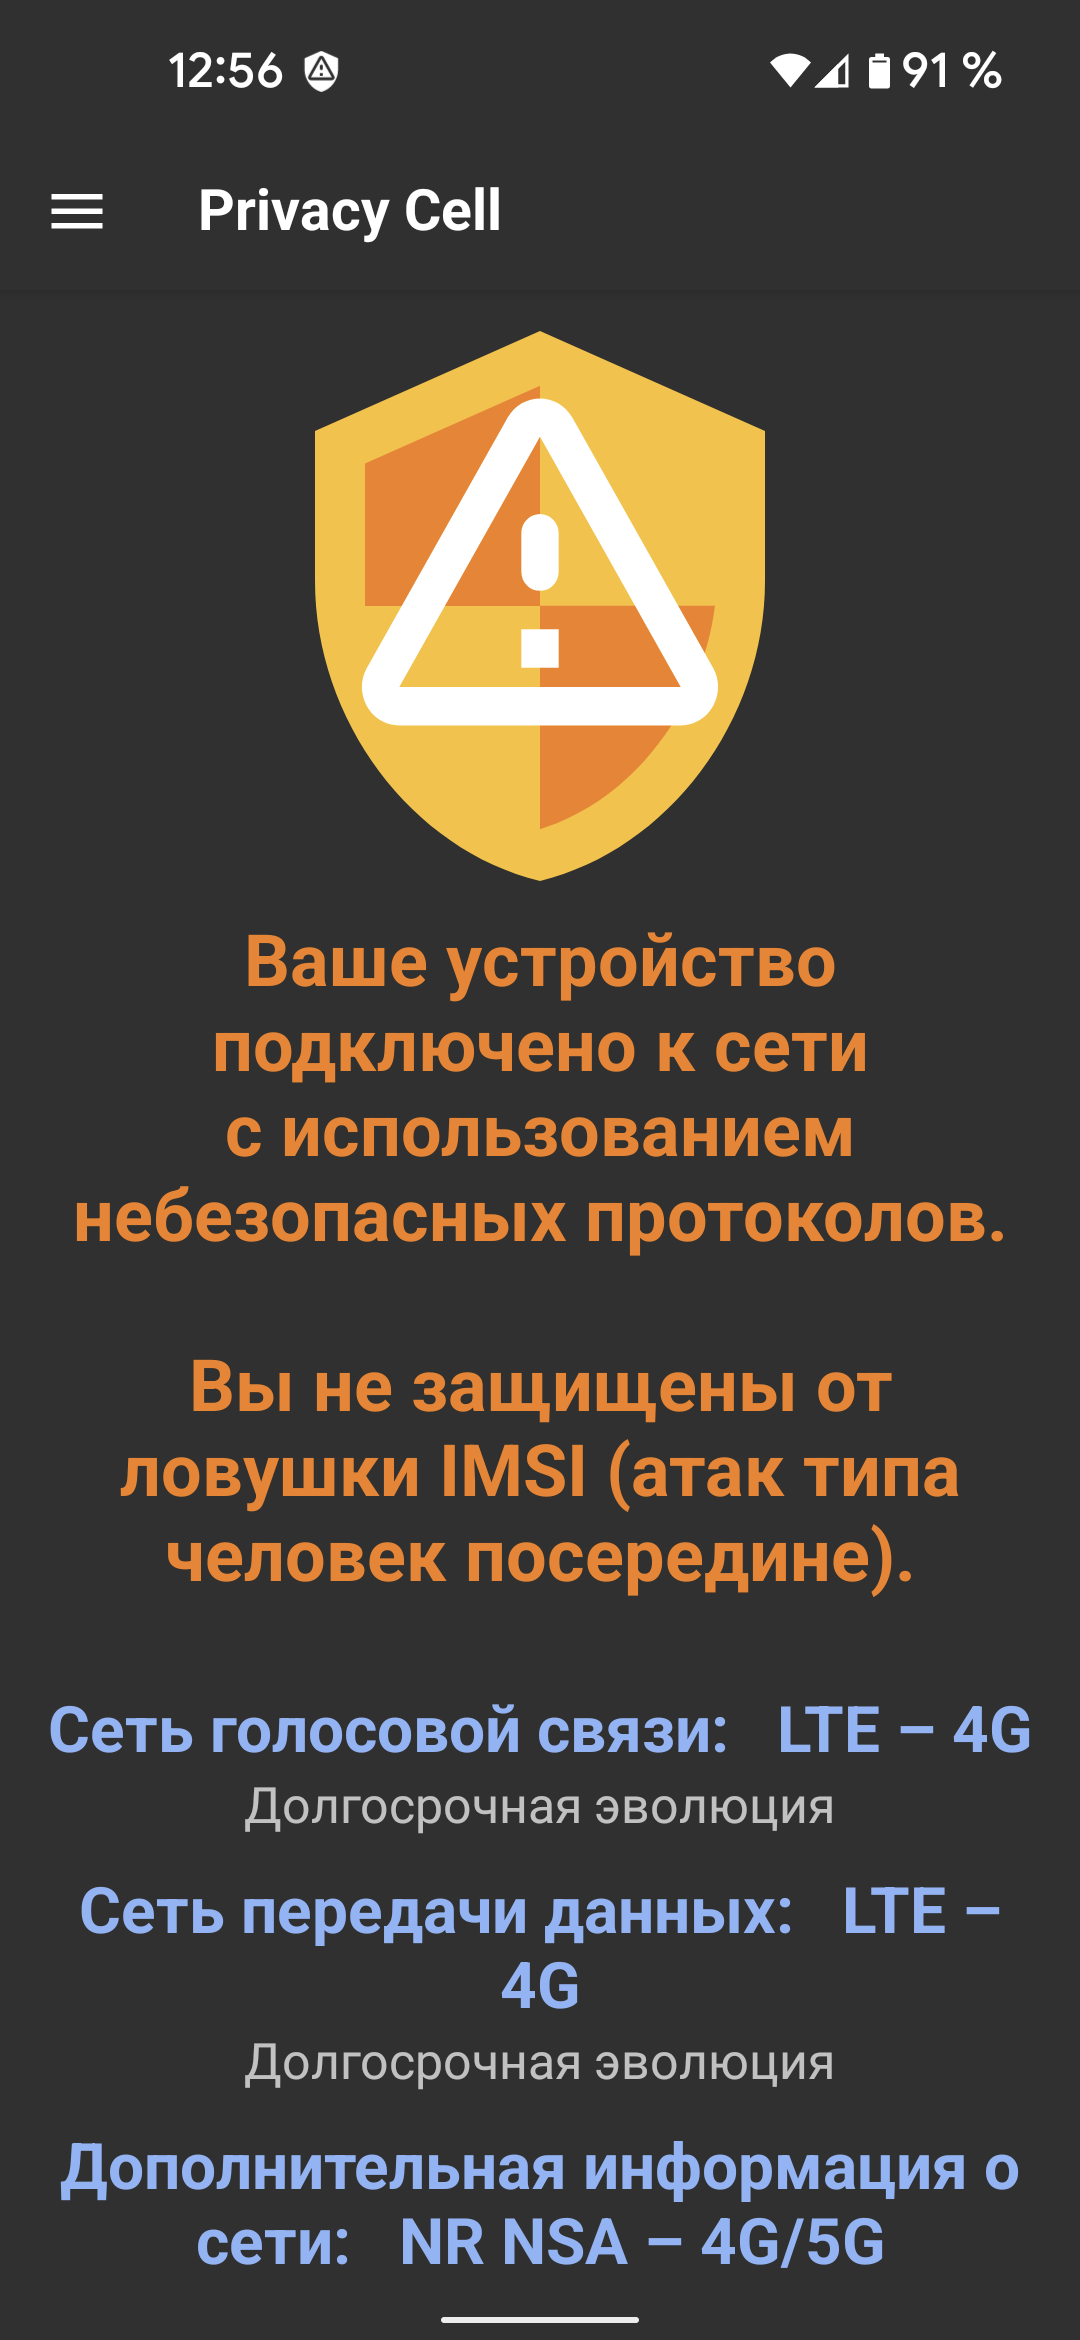 fastlane/metadata/android/ru-RU/images/phoneScreenshots/05-DarkTheme-ru.png